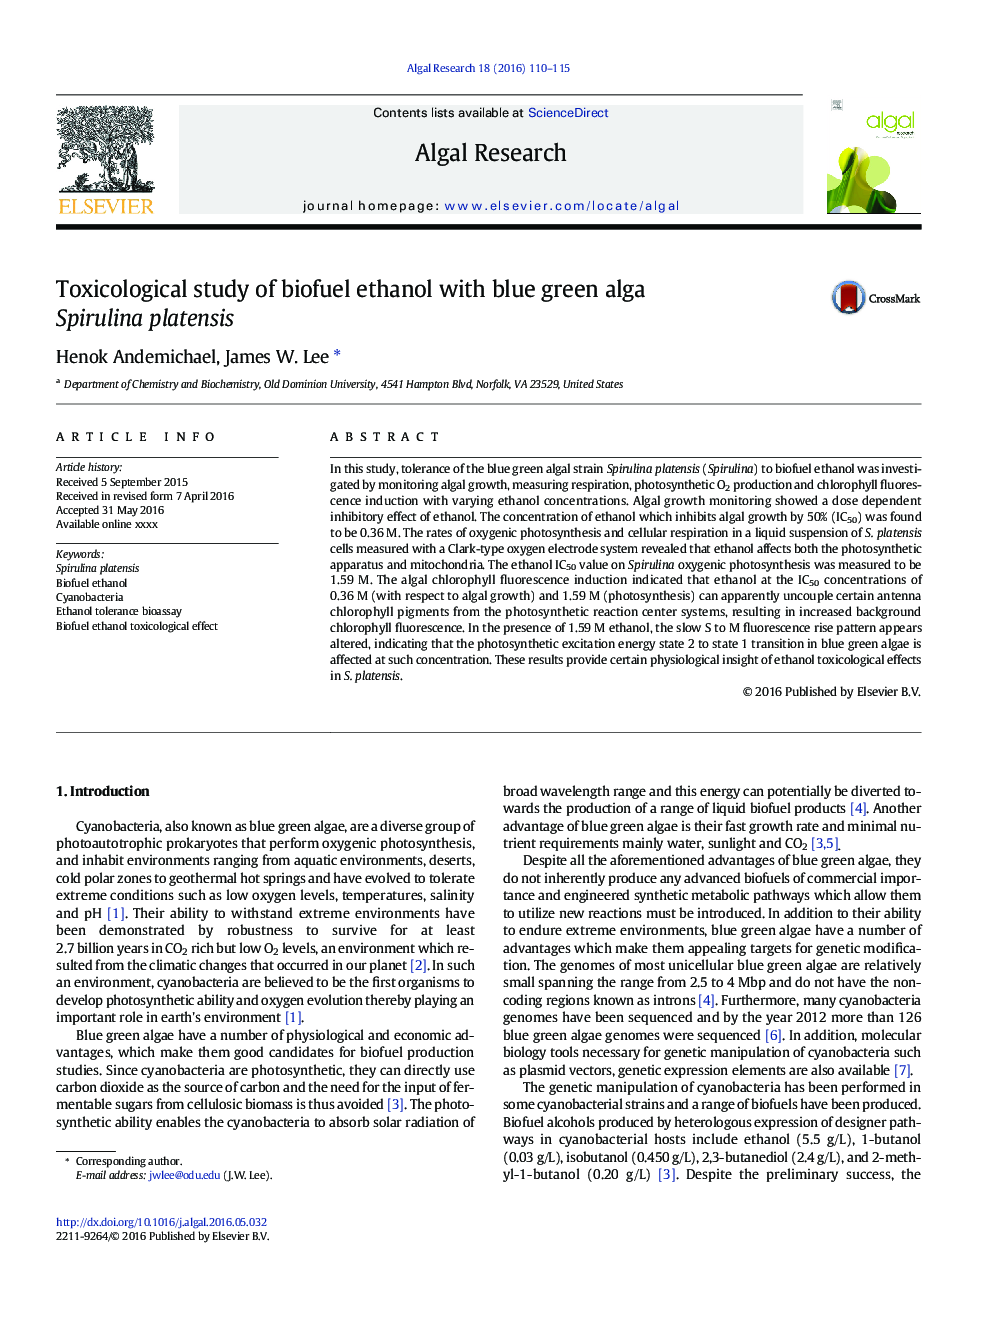 Toxicological study of biofuel ethanol with blue green alga Spirulina platensis